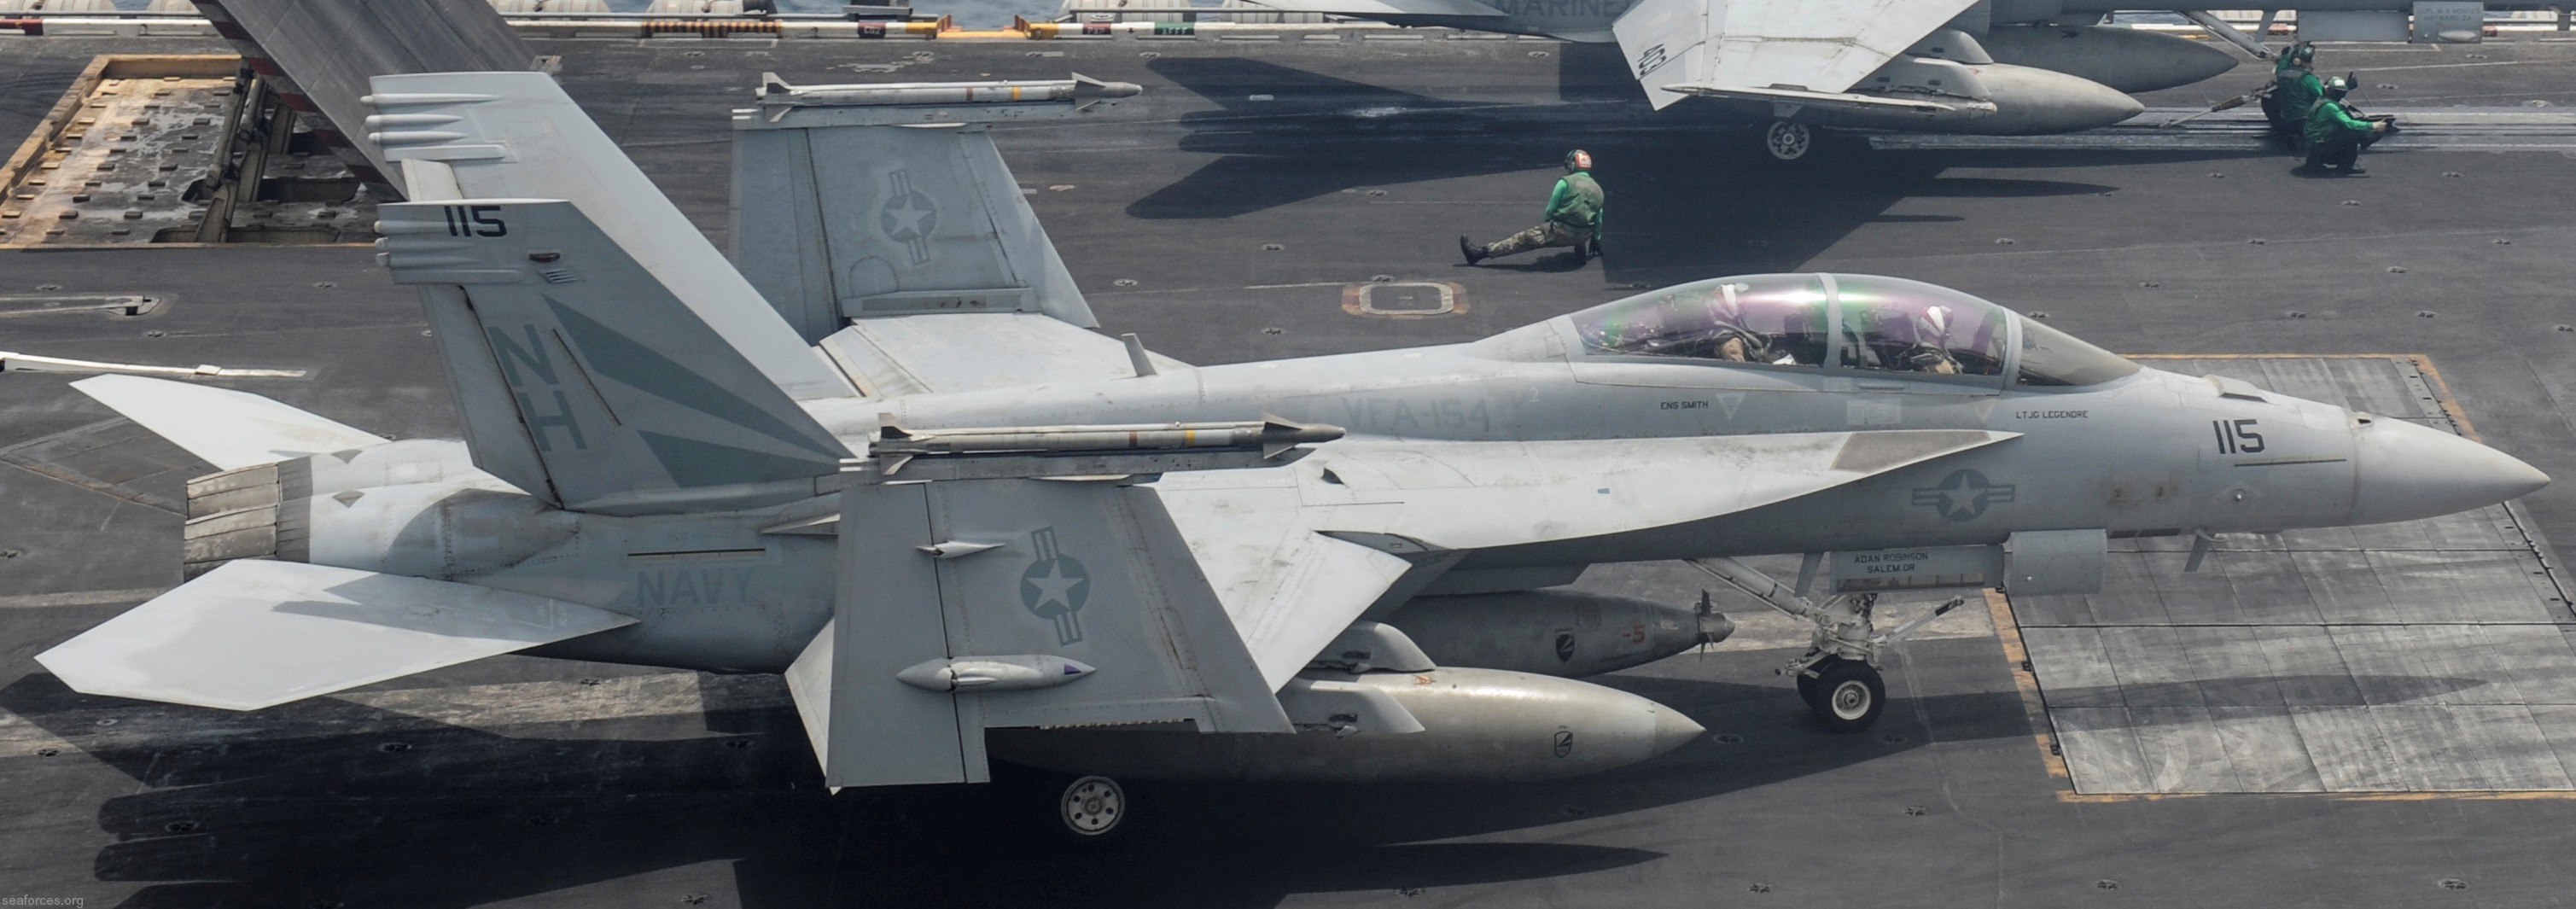 vfa-154 black knights strike fighter squadron navy f/a-18f super hornet carrier air wing cvw-11 uss nimitz cvn-68 57